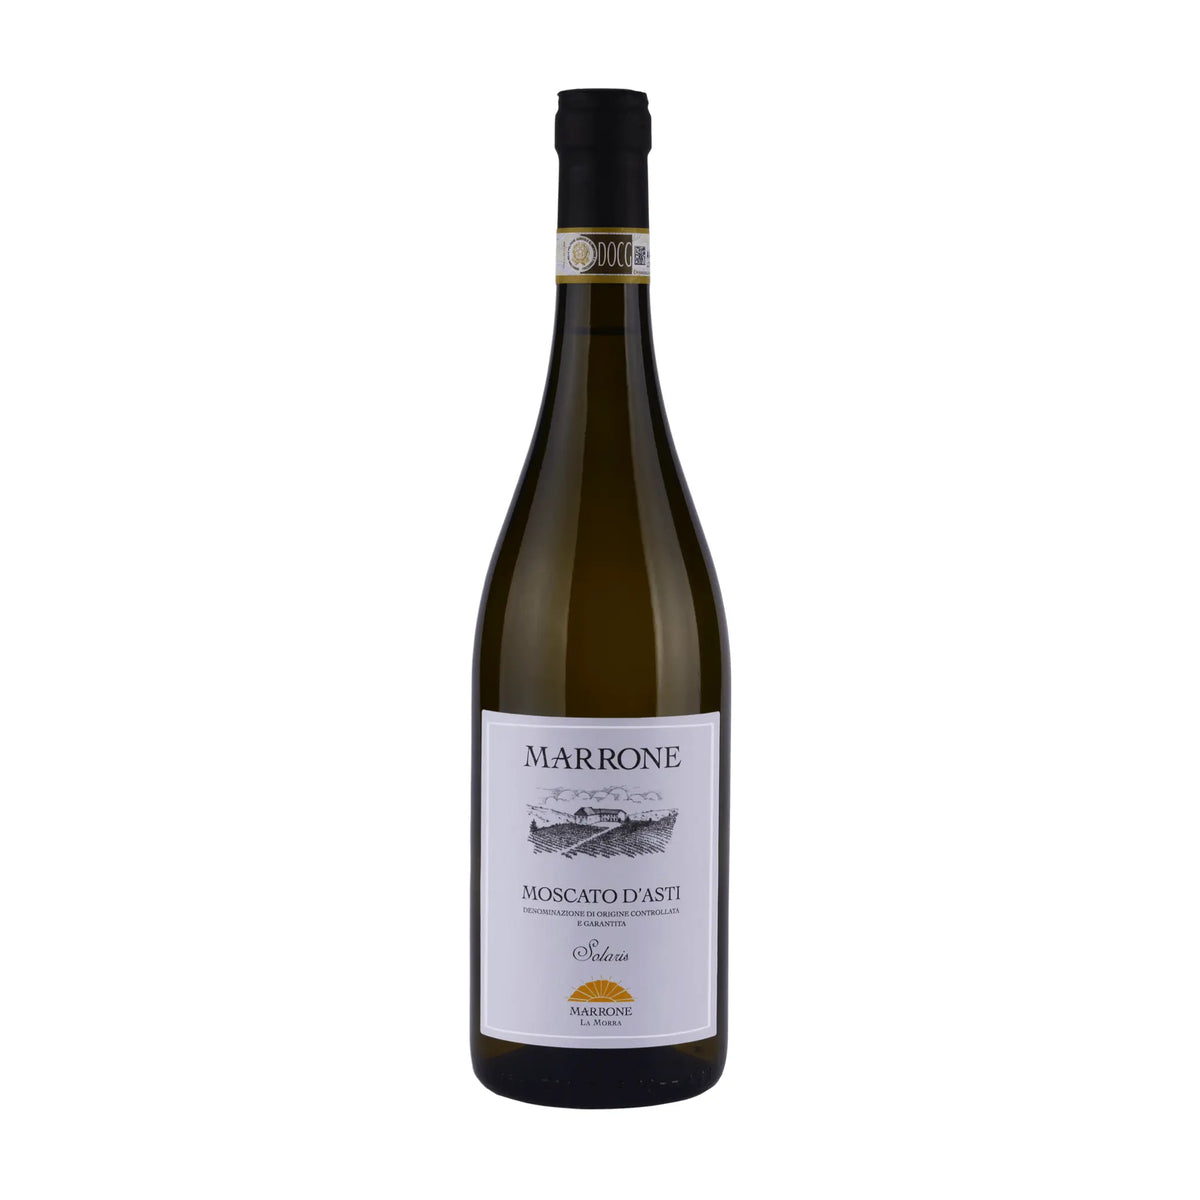 Marrone-Süßwein-Süßwein-Piemont-Italien-Solaris Moscato d'Asti DOCG-WINECOM